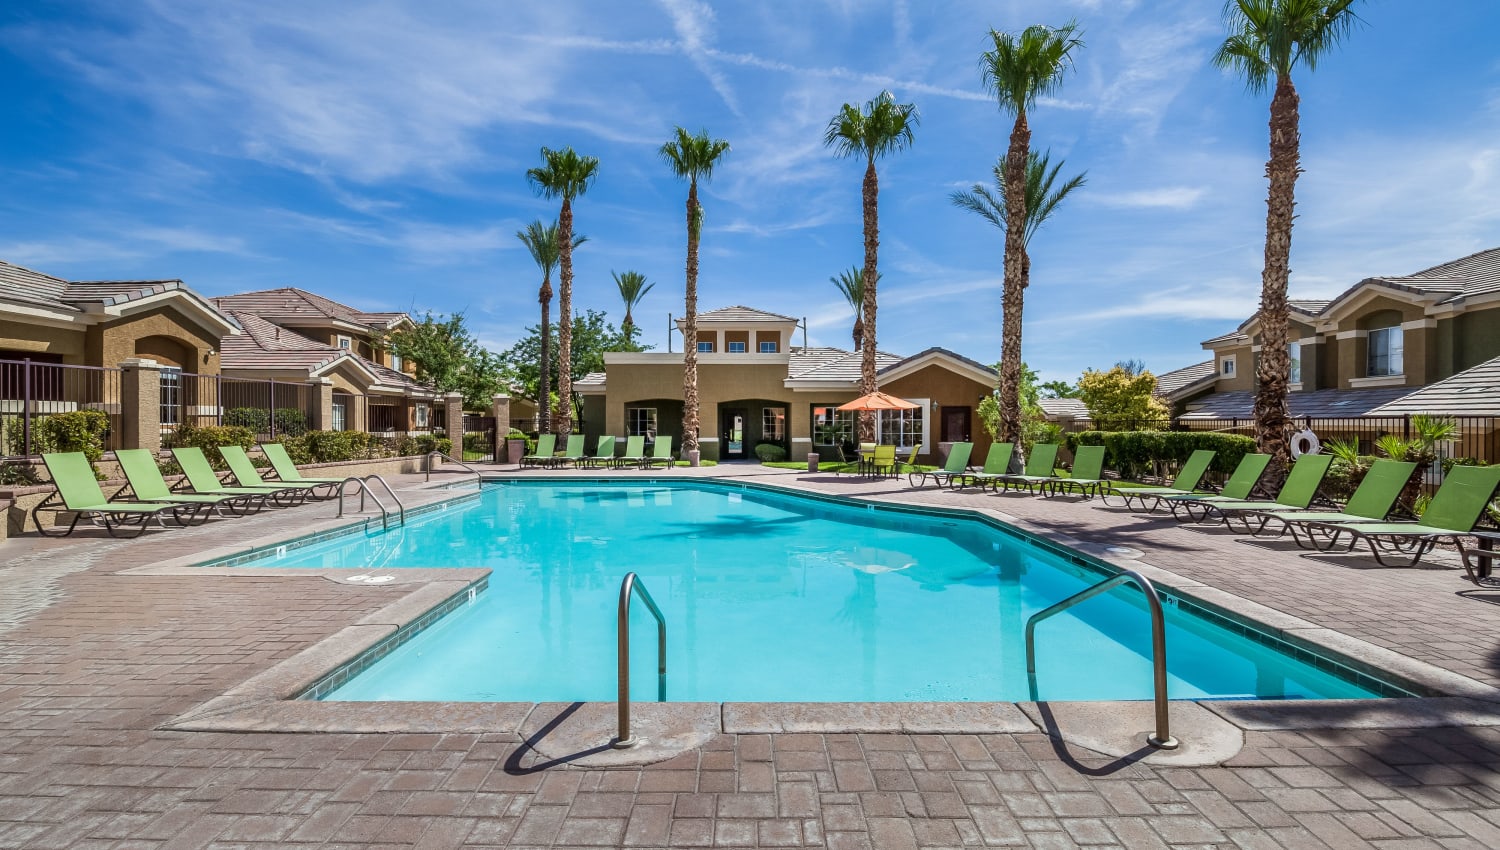 Sparkling pool at Red Rock Villas Apartments in Las Vegas, Nevada